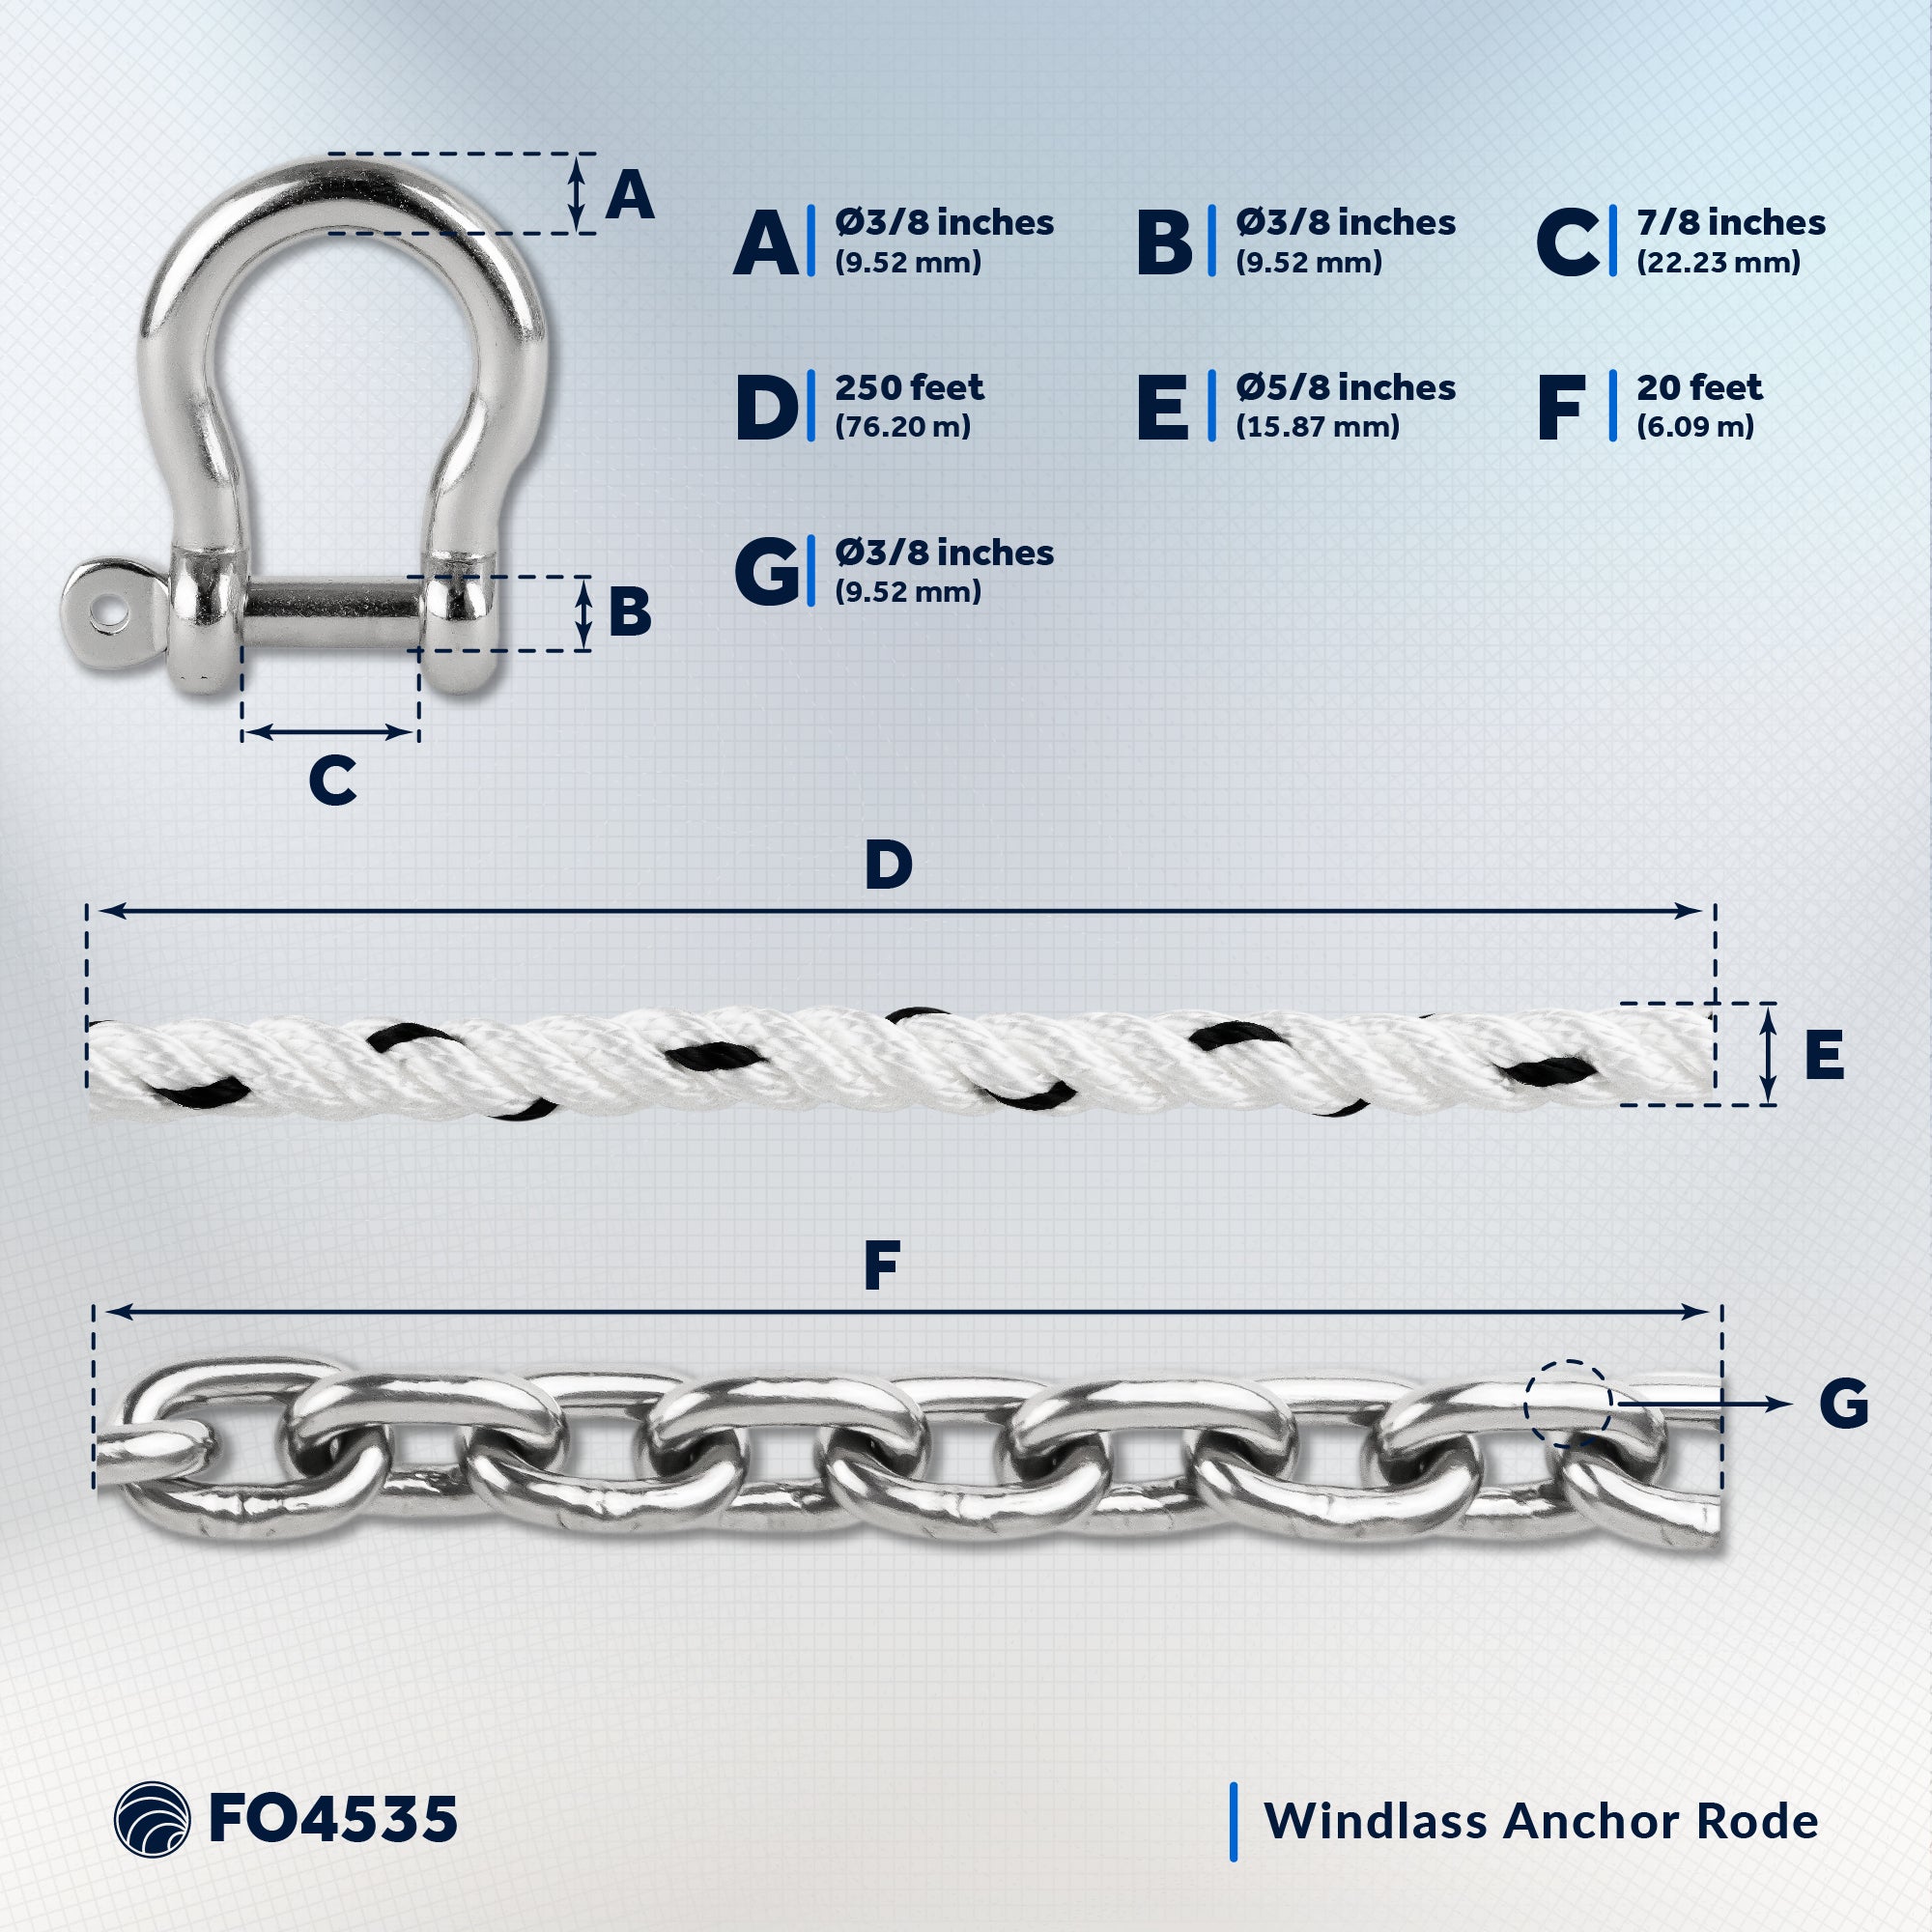 Windlass Anchor Rode, 5/8" x 250' Nylon 3-Strand Rope, 3/8" x 20' G4 Stainless Steel Chain - FO4535